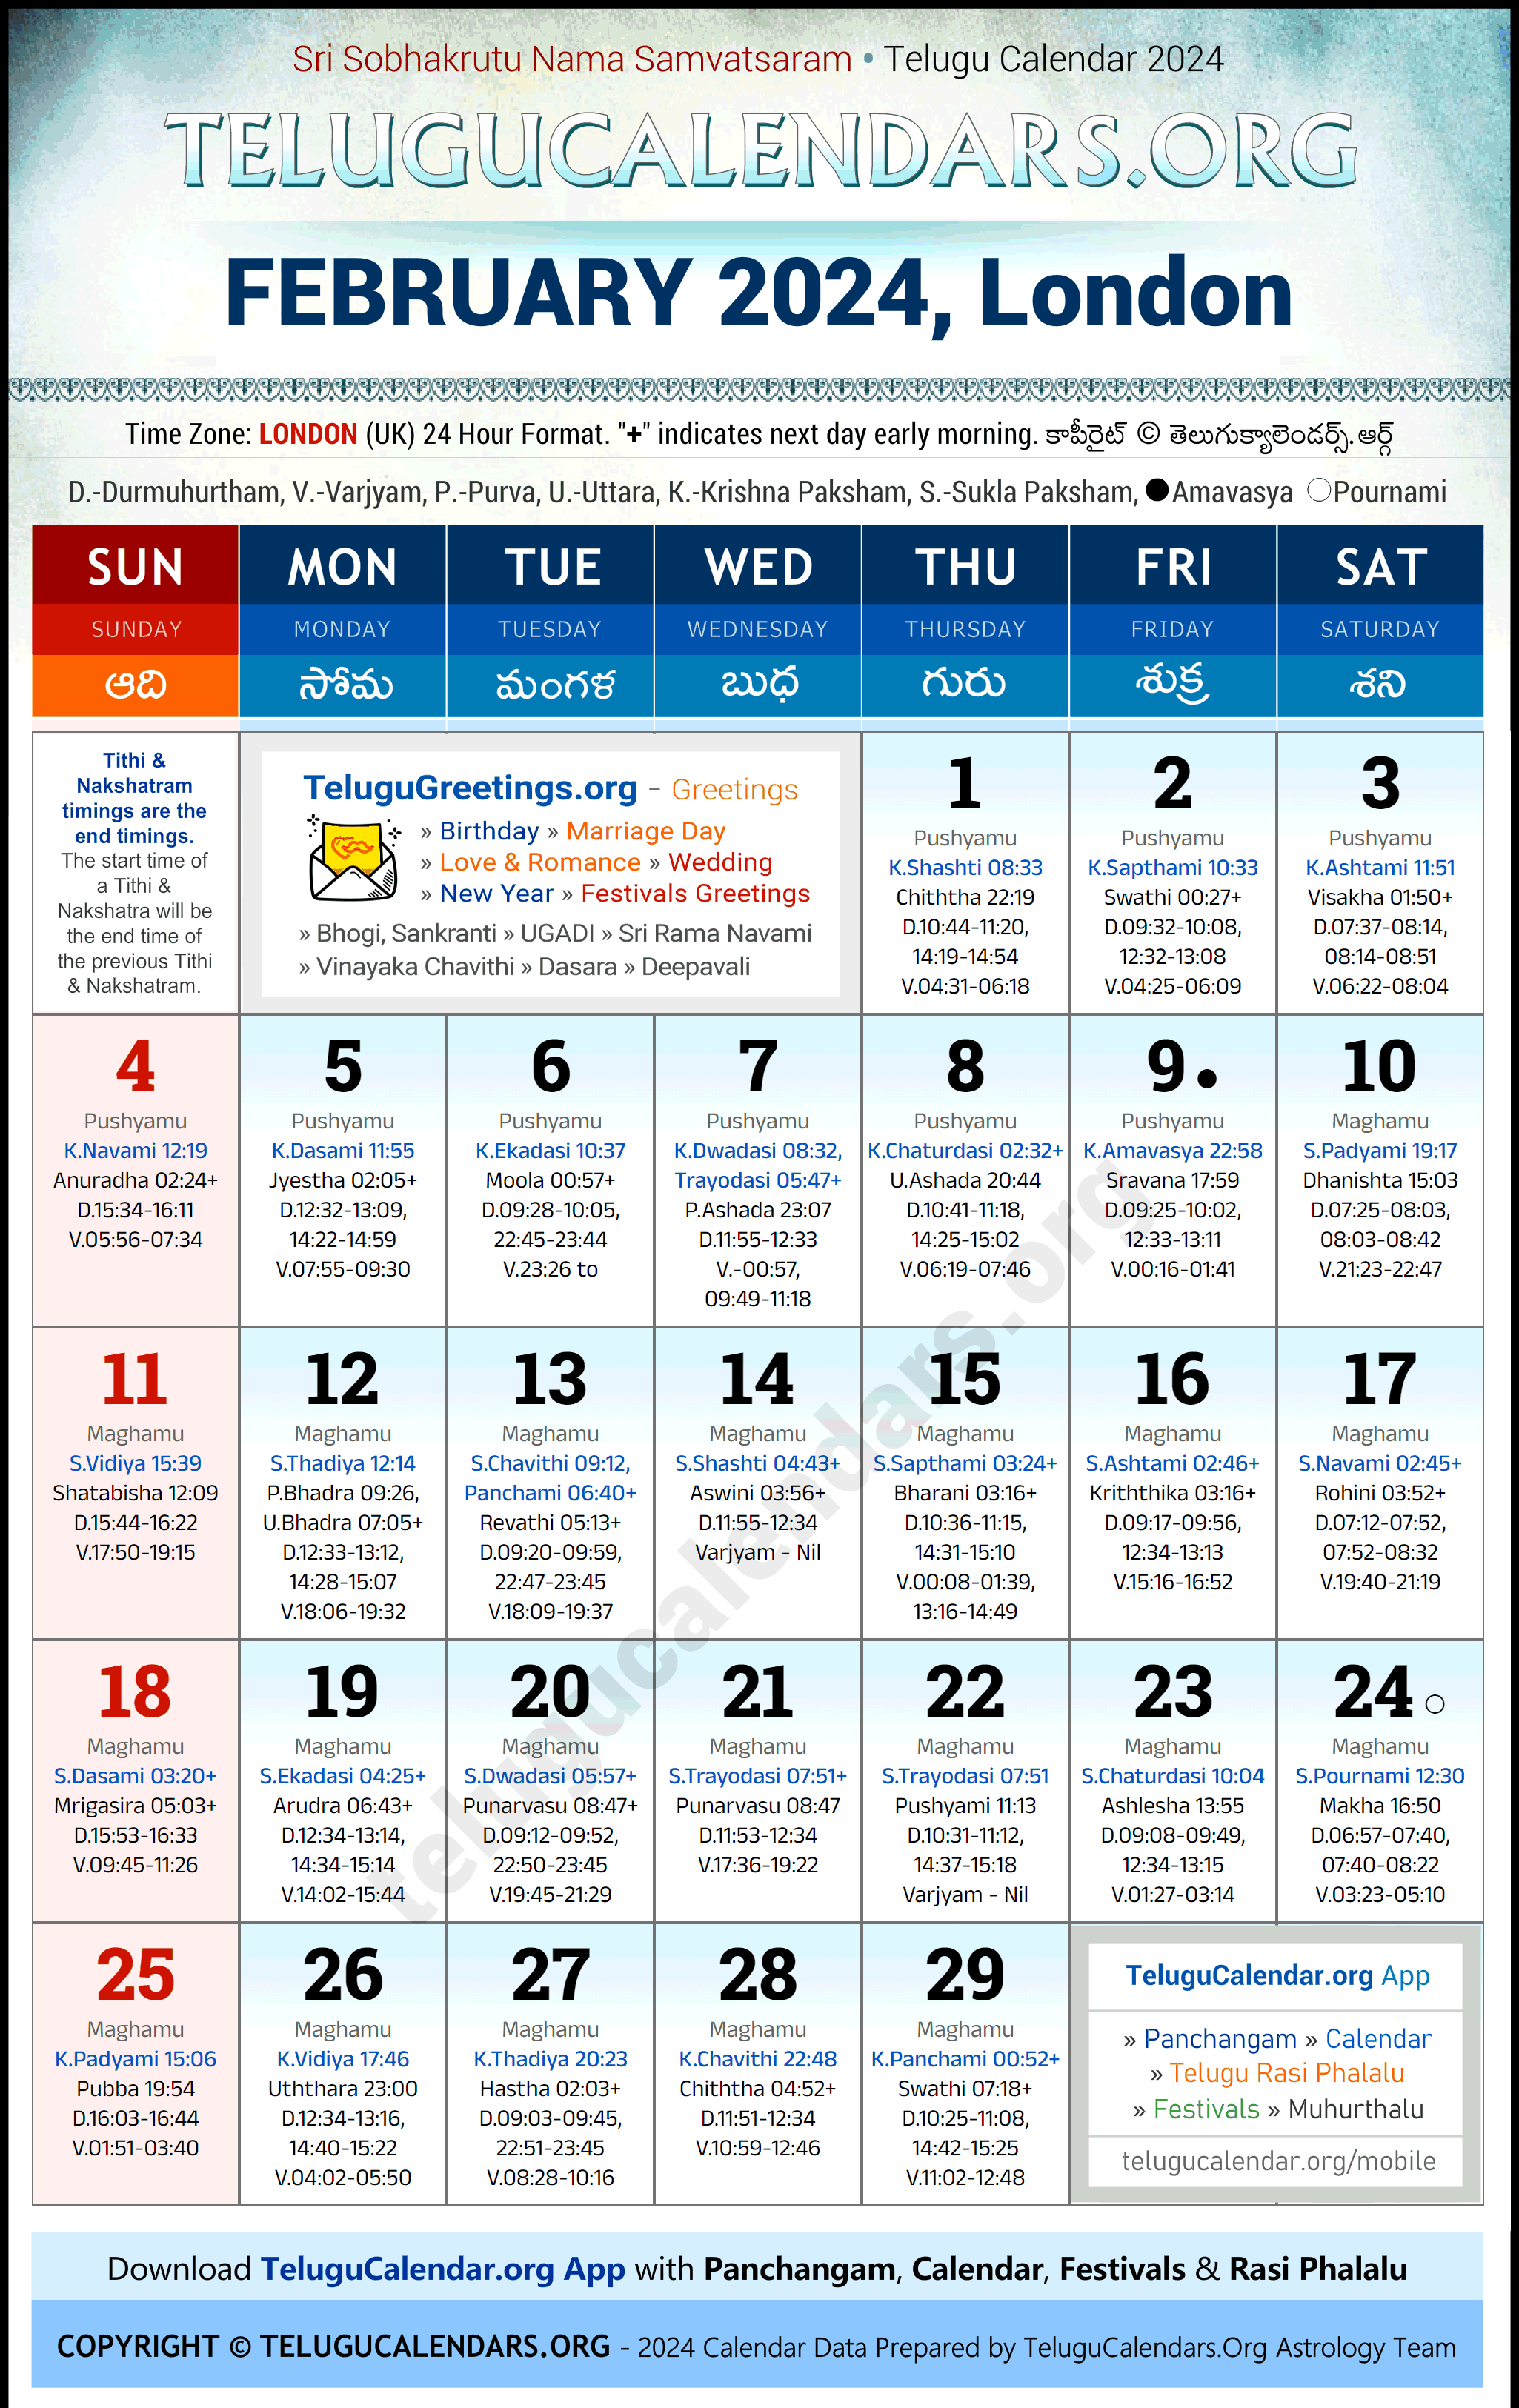 Telugu Calendar 2024 February Festivals for London